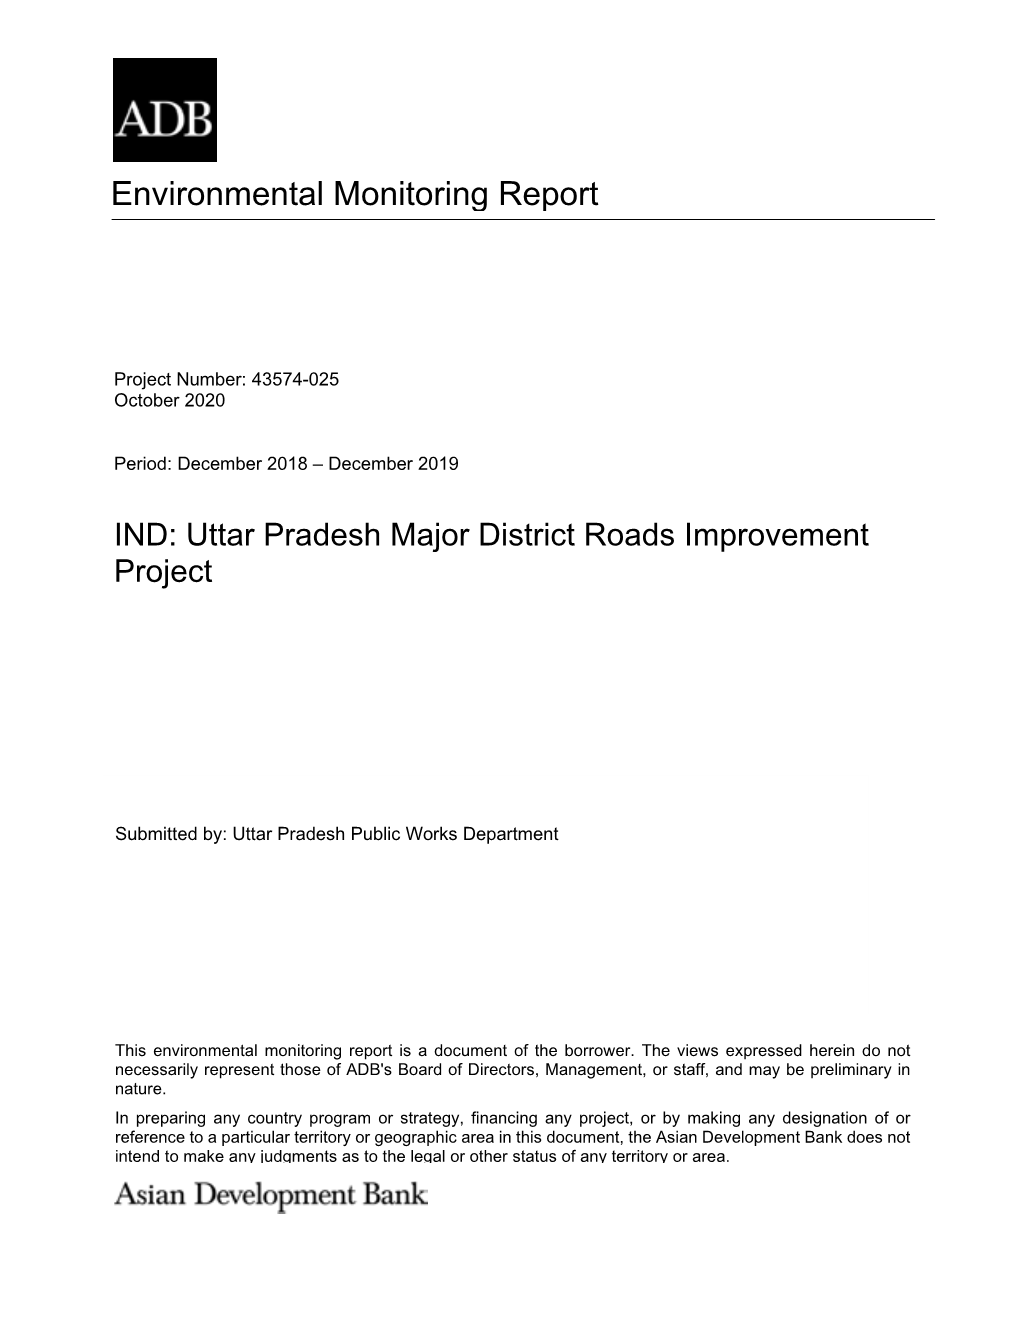 43574-025: Uttar Pradesh Major District Roads Improvement Project